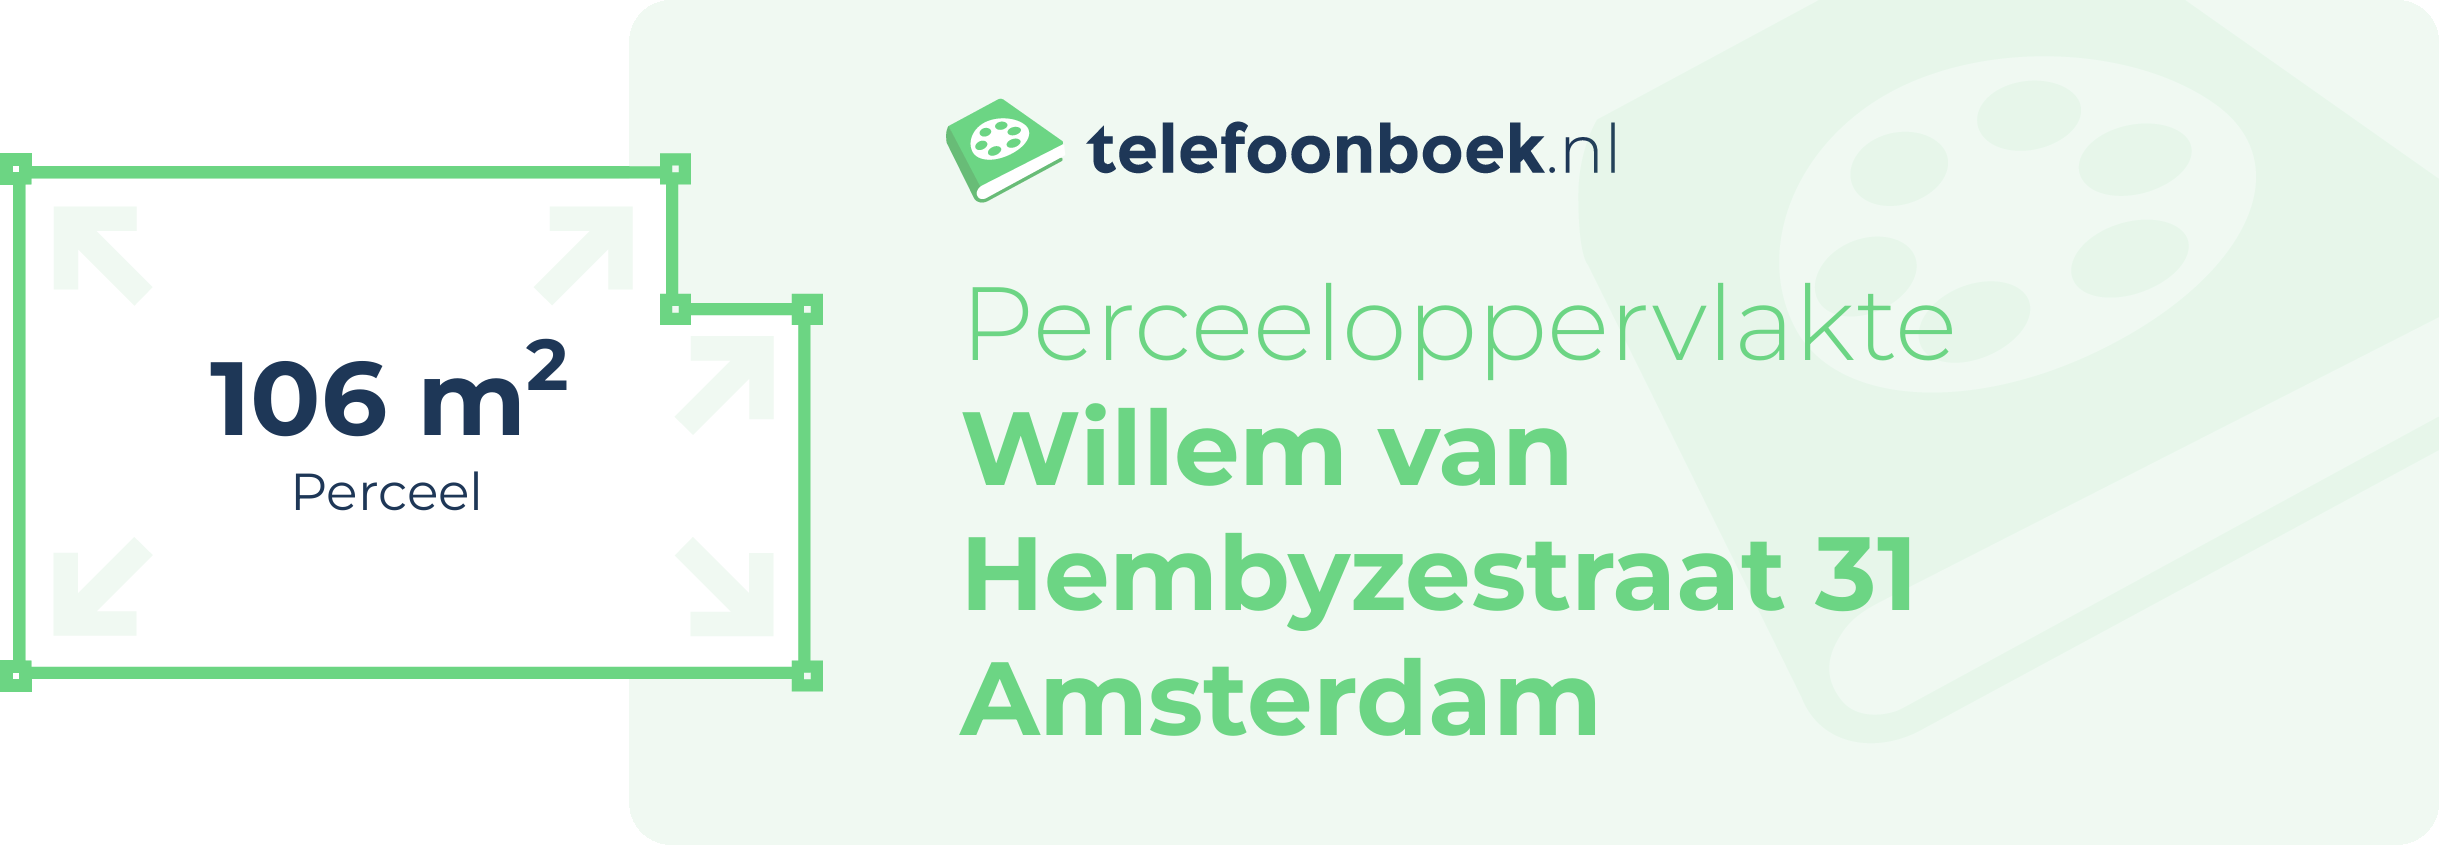 Perceeloppervlakte Willem Van Hembyzestraat 31 Amsterdam